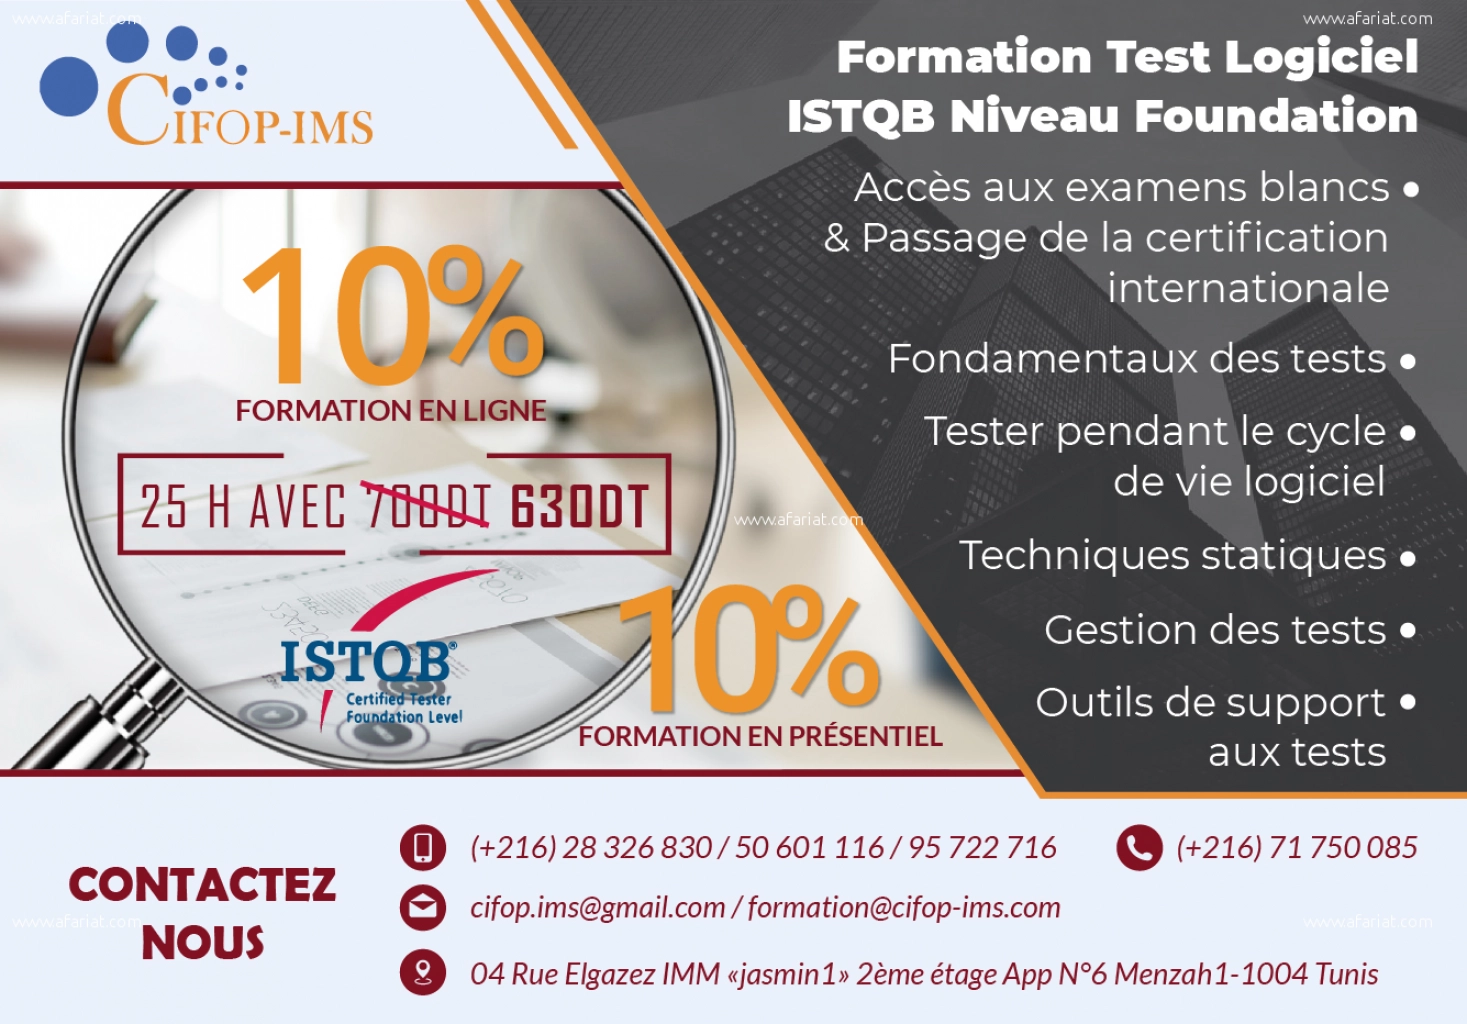 Formation Test logiciel, ISTQB_niveau_Fondation